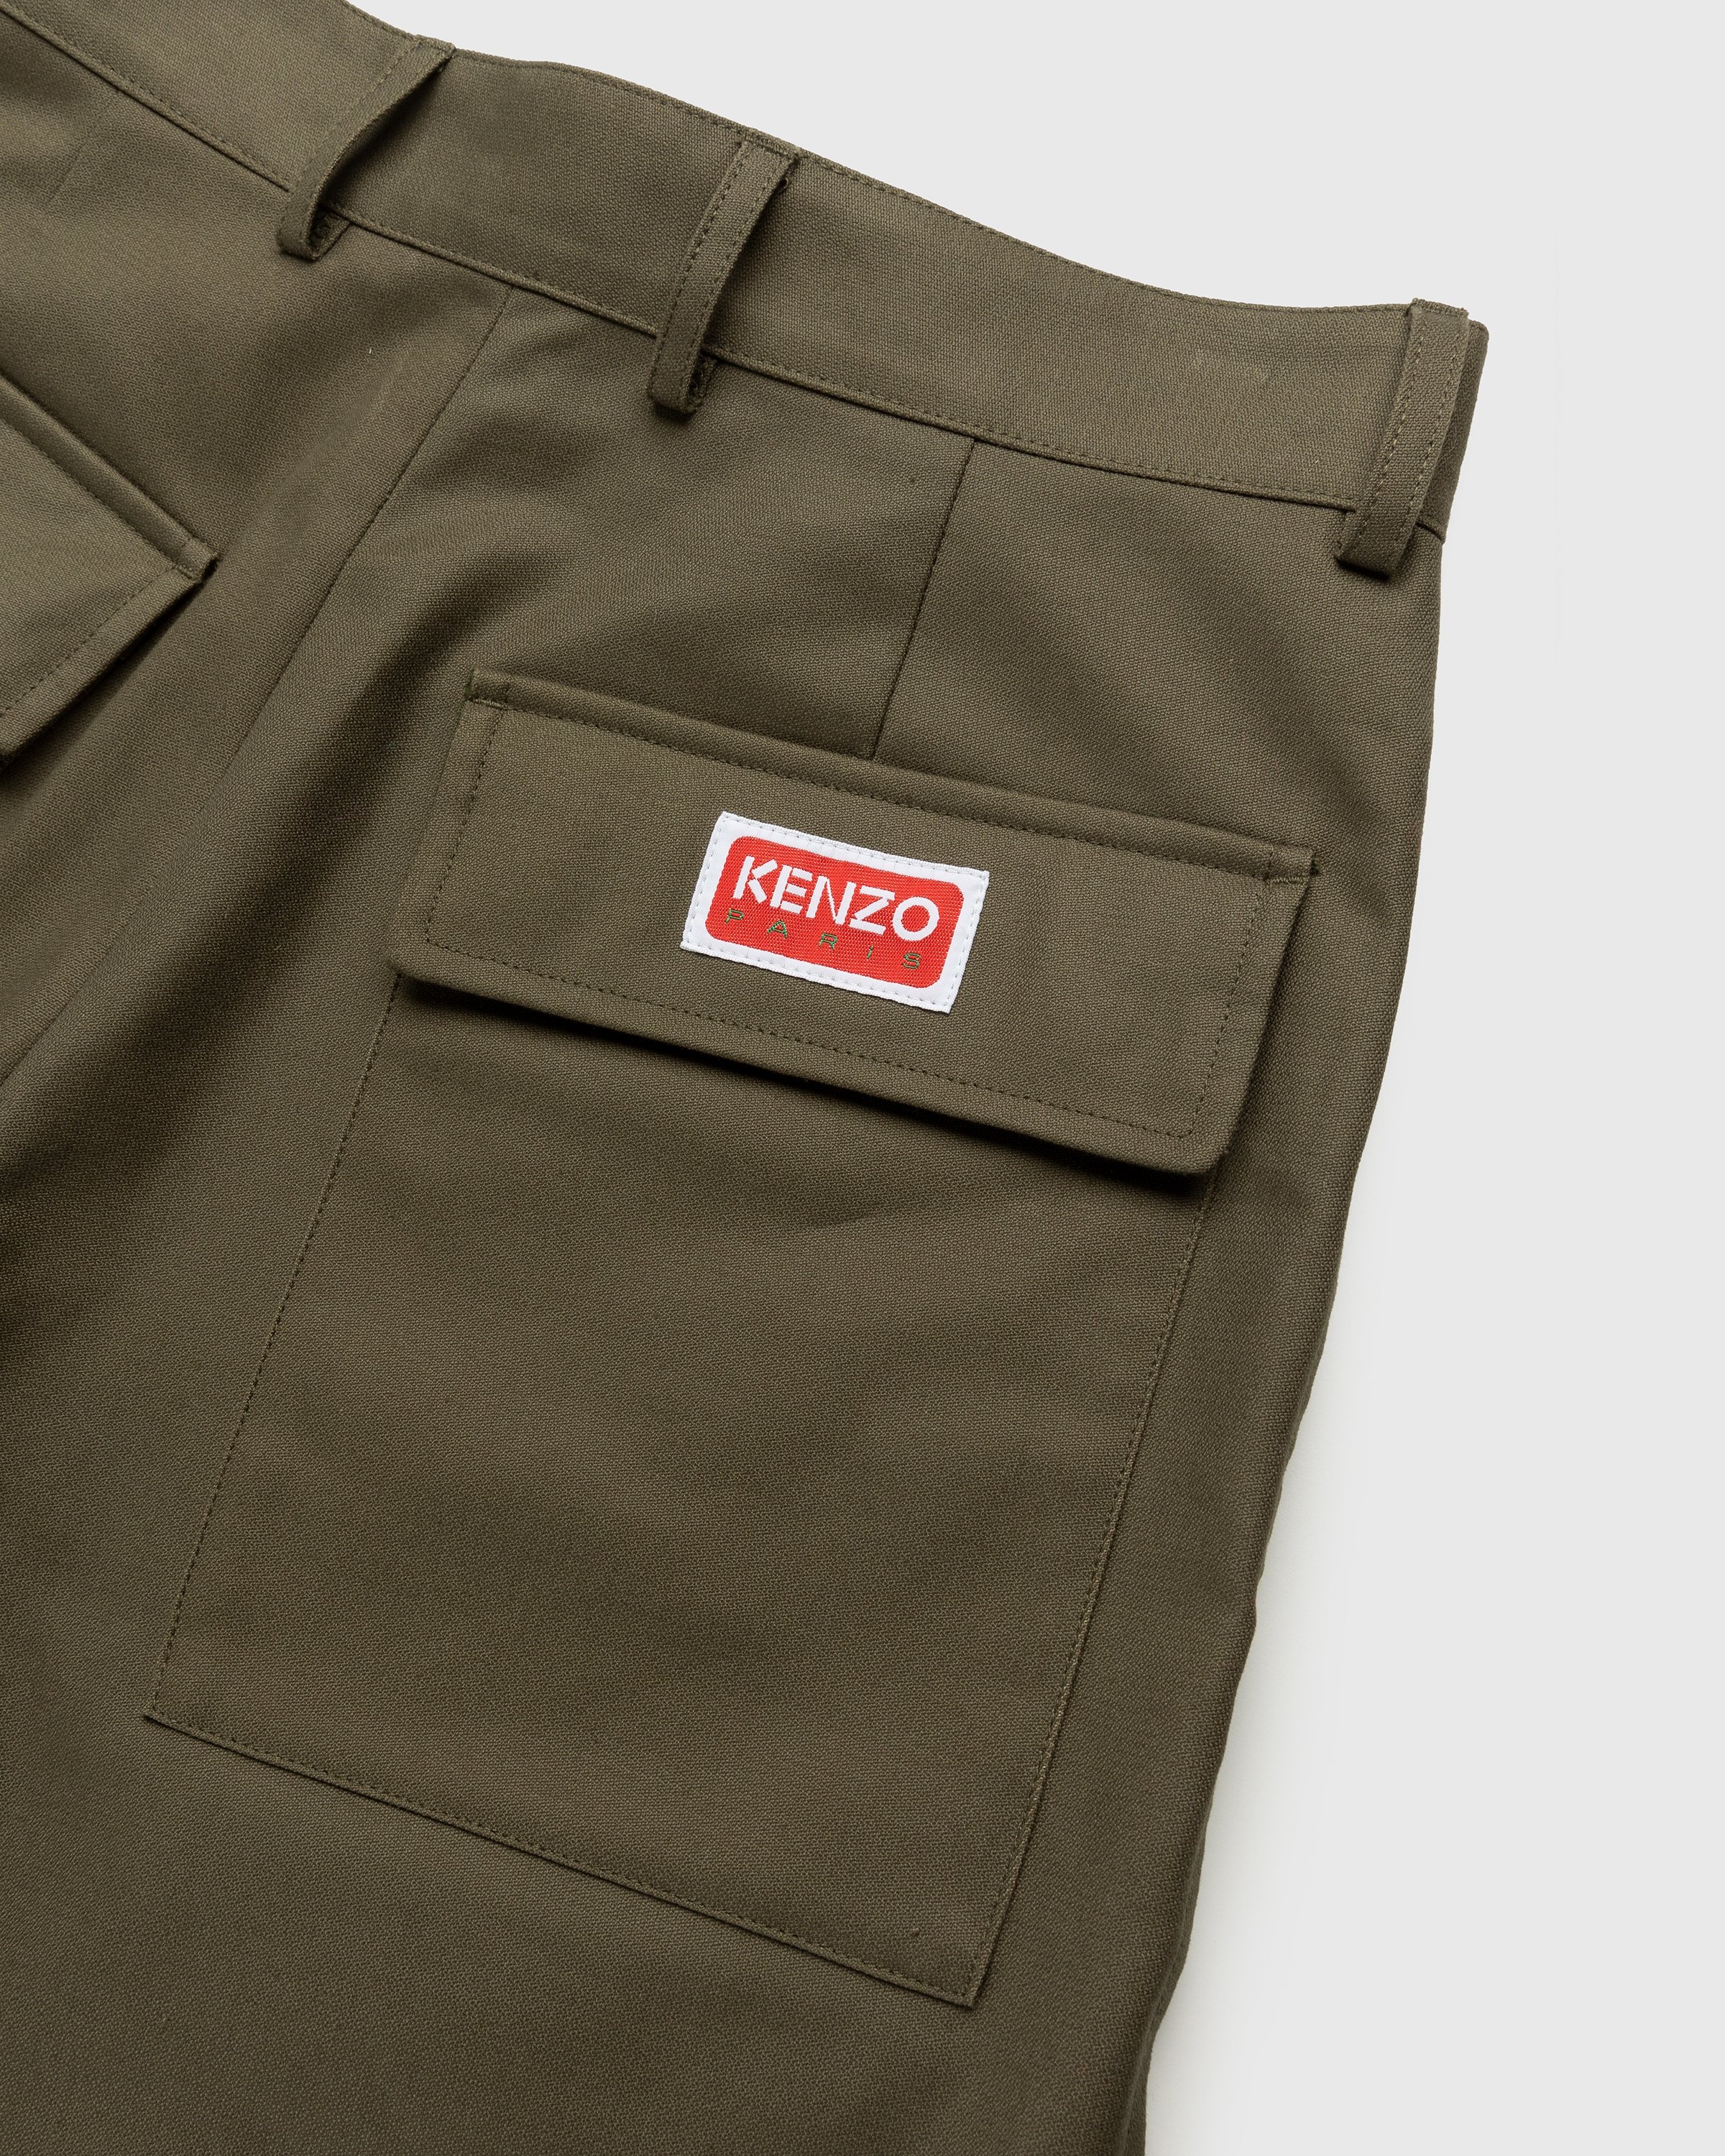 Kenzo – Tailored Pants Dark Khaki - Cargo Pants - Green - Image 5